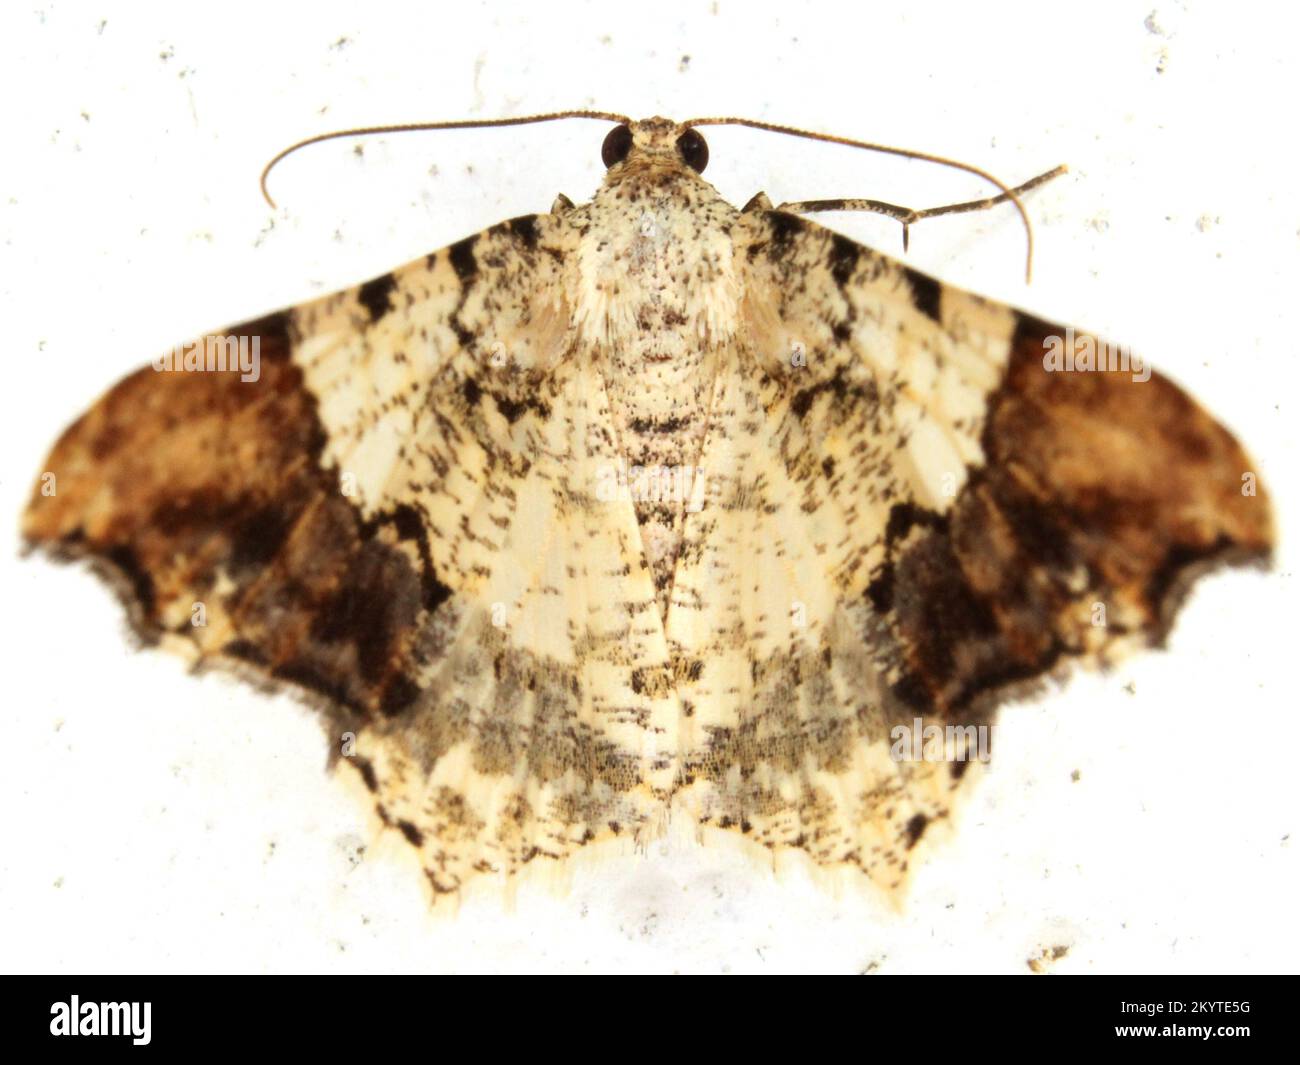 Geometer moth (family Geometridae) Ennominae - Macaria species isolated on a white background Stock Photo